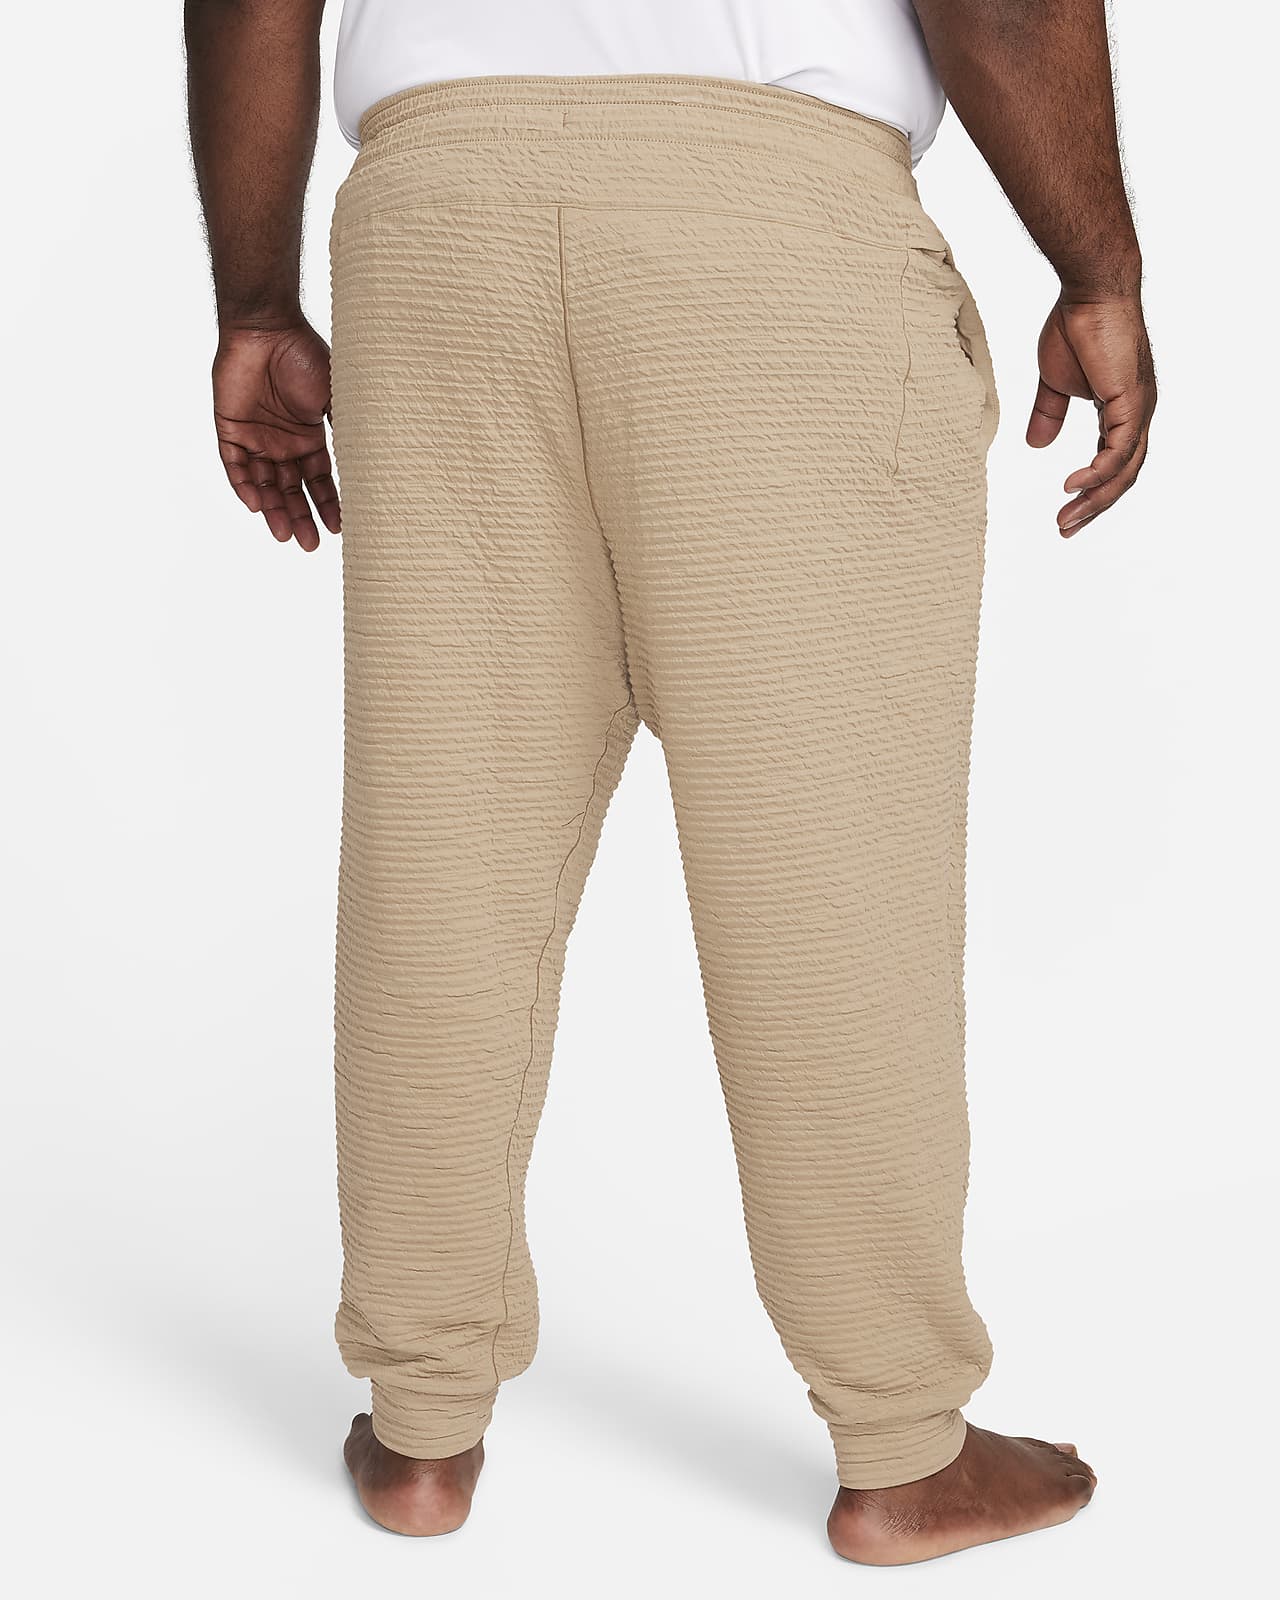 Nike Dri-FIT Yoga Pants Black Men's Size XL DV9885-010 NWT MSRP